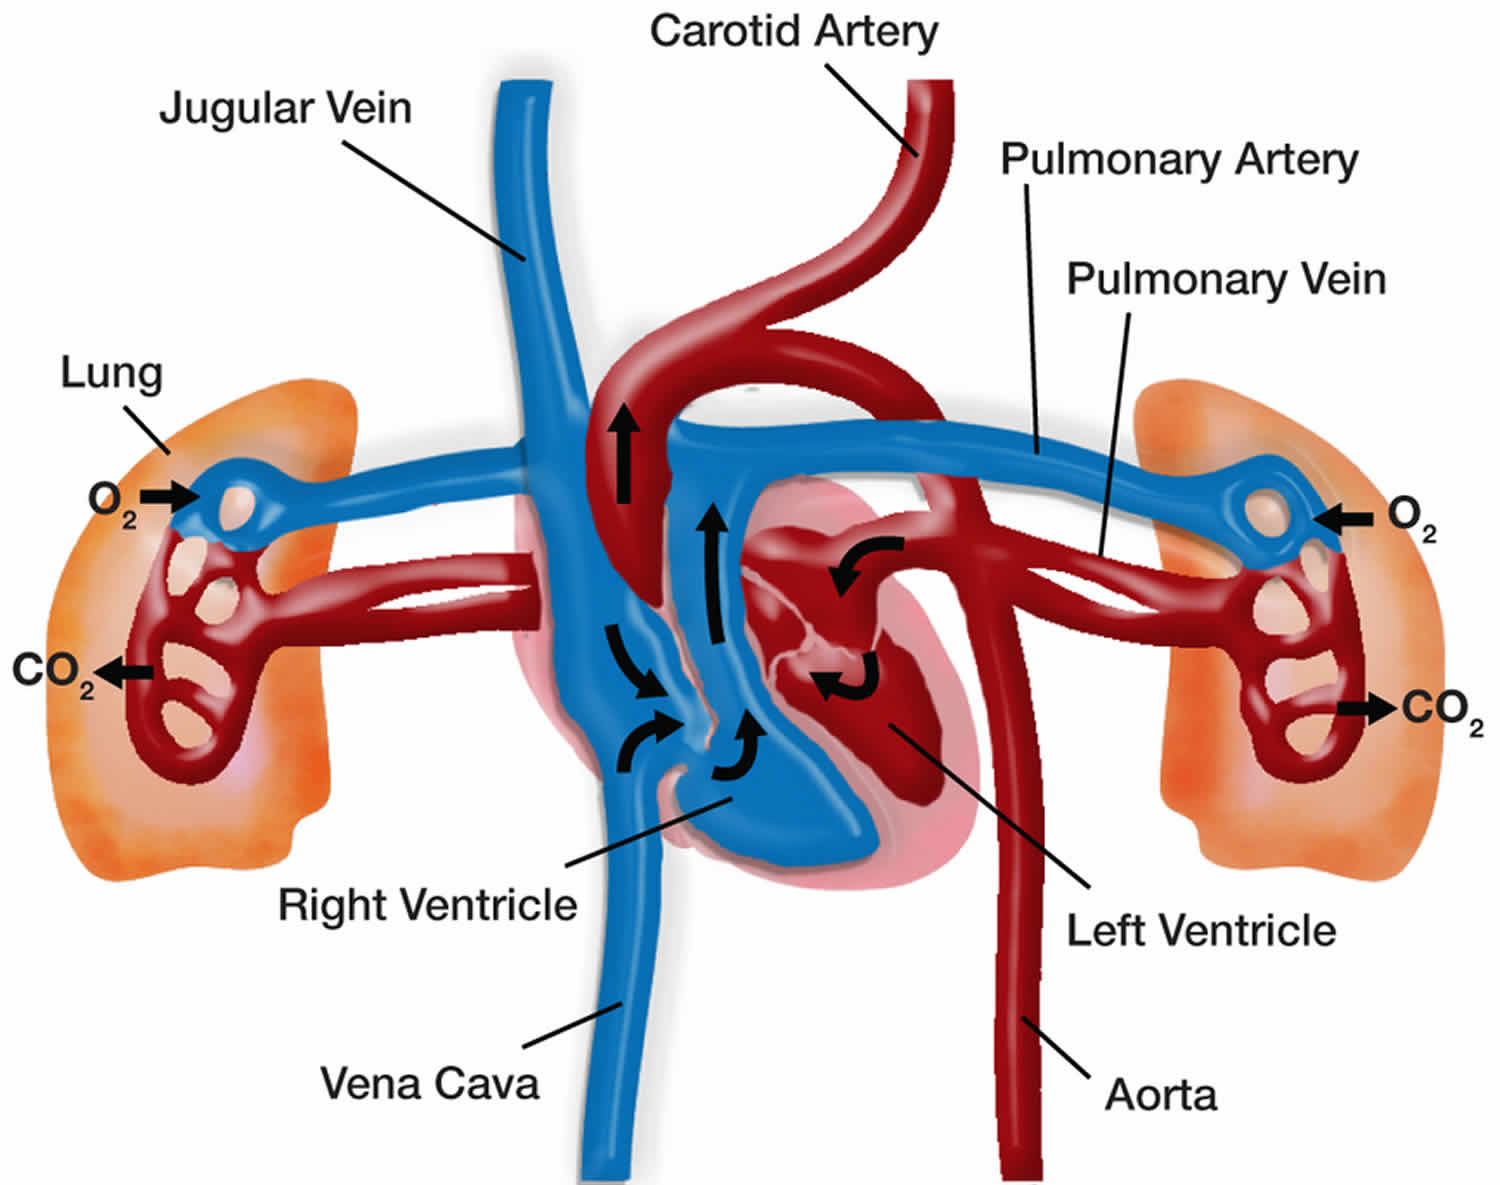 Pulmonary artery anatomy